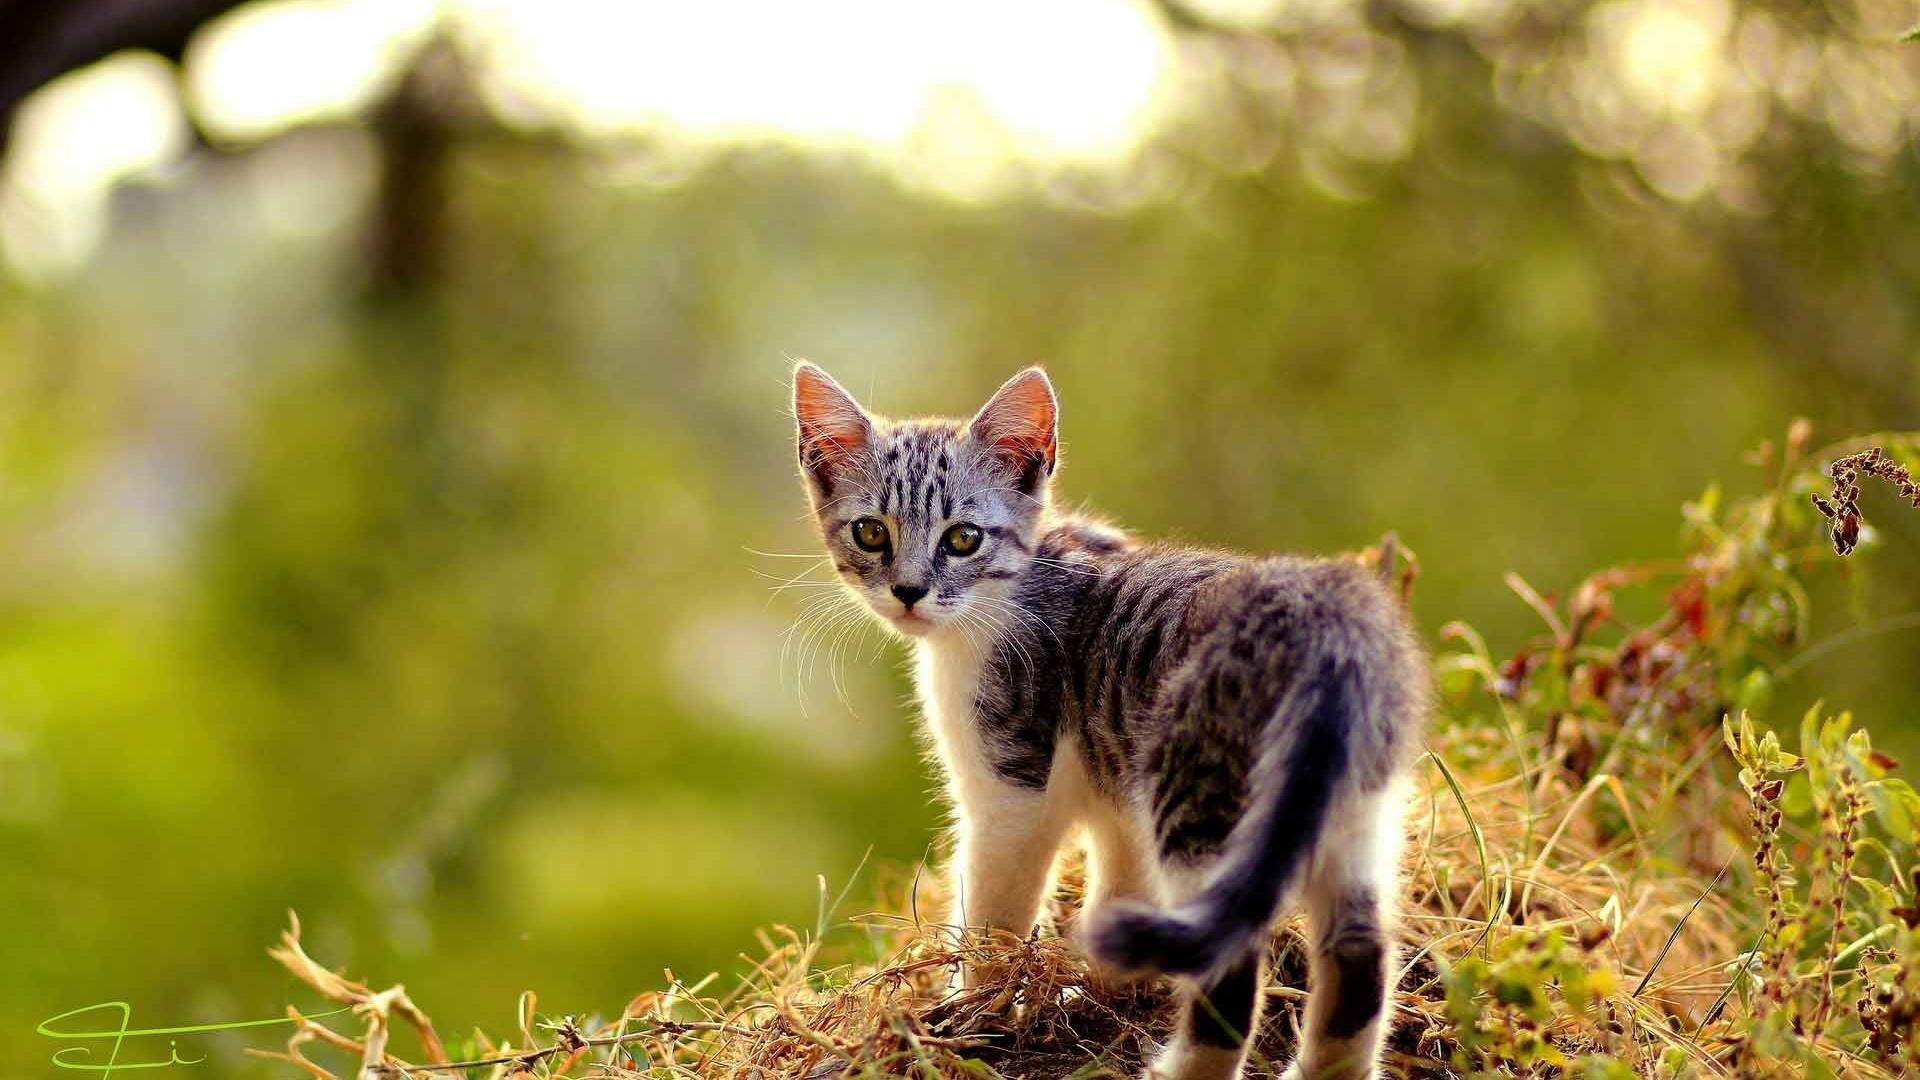 1920x1080  cute cat in grass photo wide  wallpapers:1280x800,1440x900,1680x1050 - hd